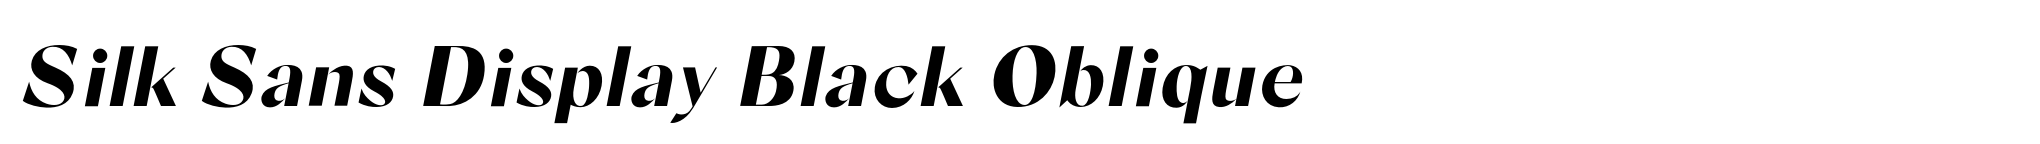 Silk Sans Display Black Oblique image